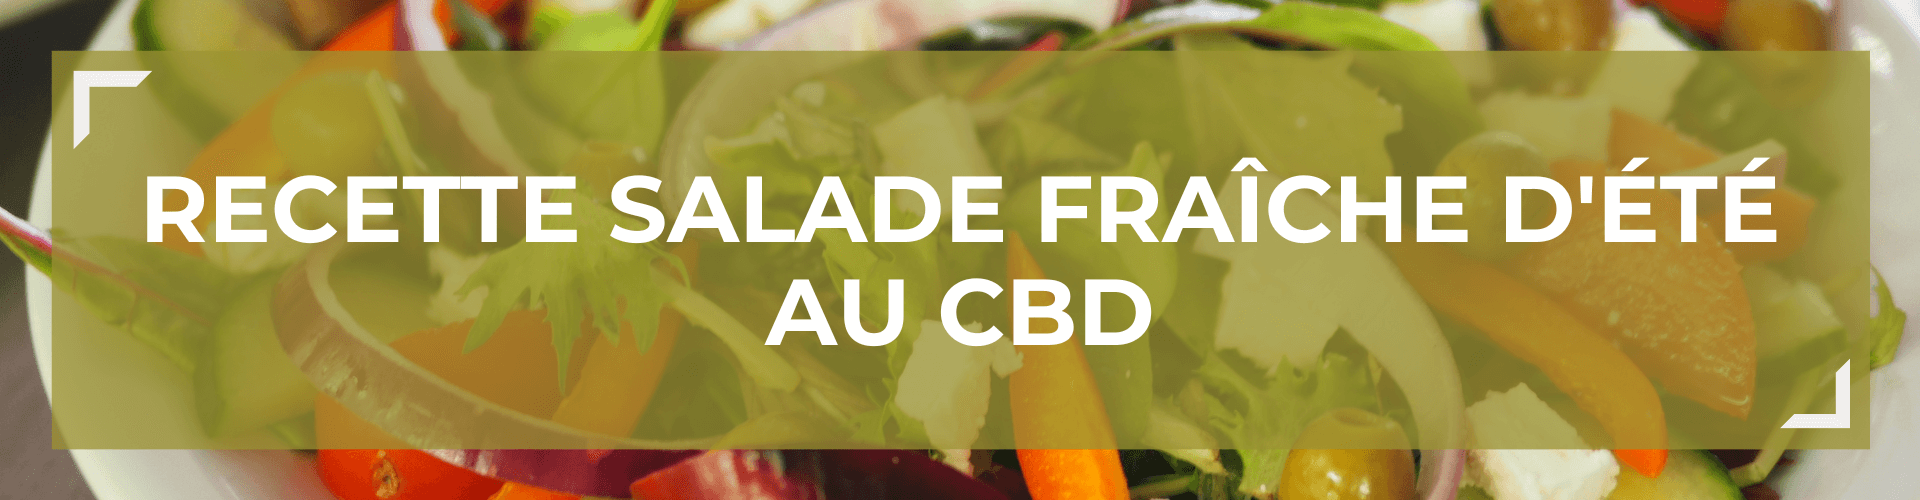 Recette Salade Frache Au CBD